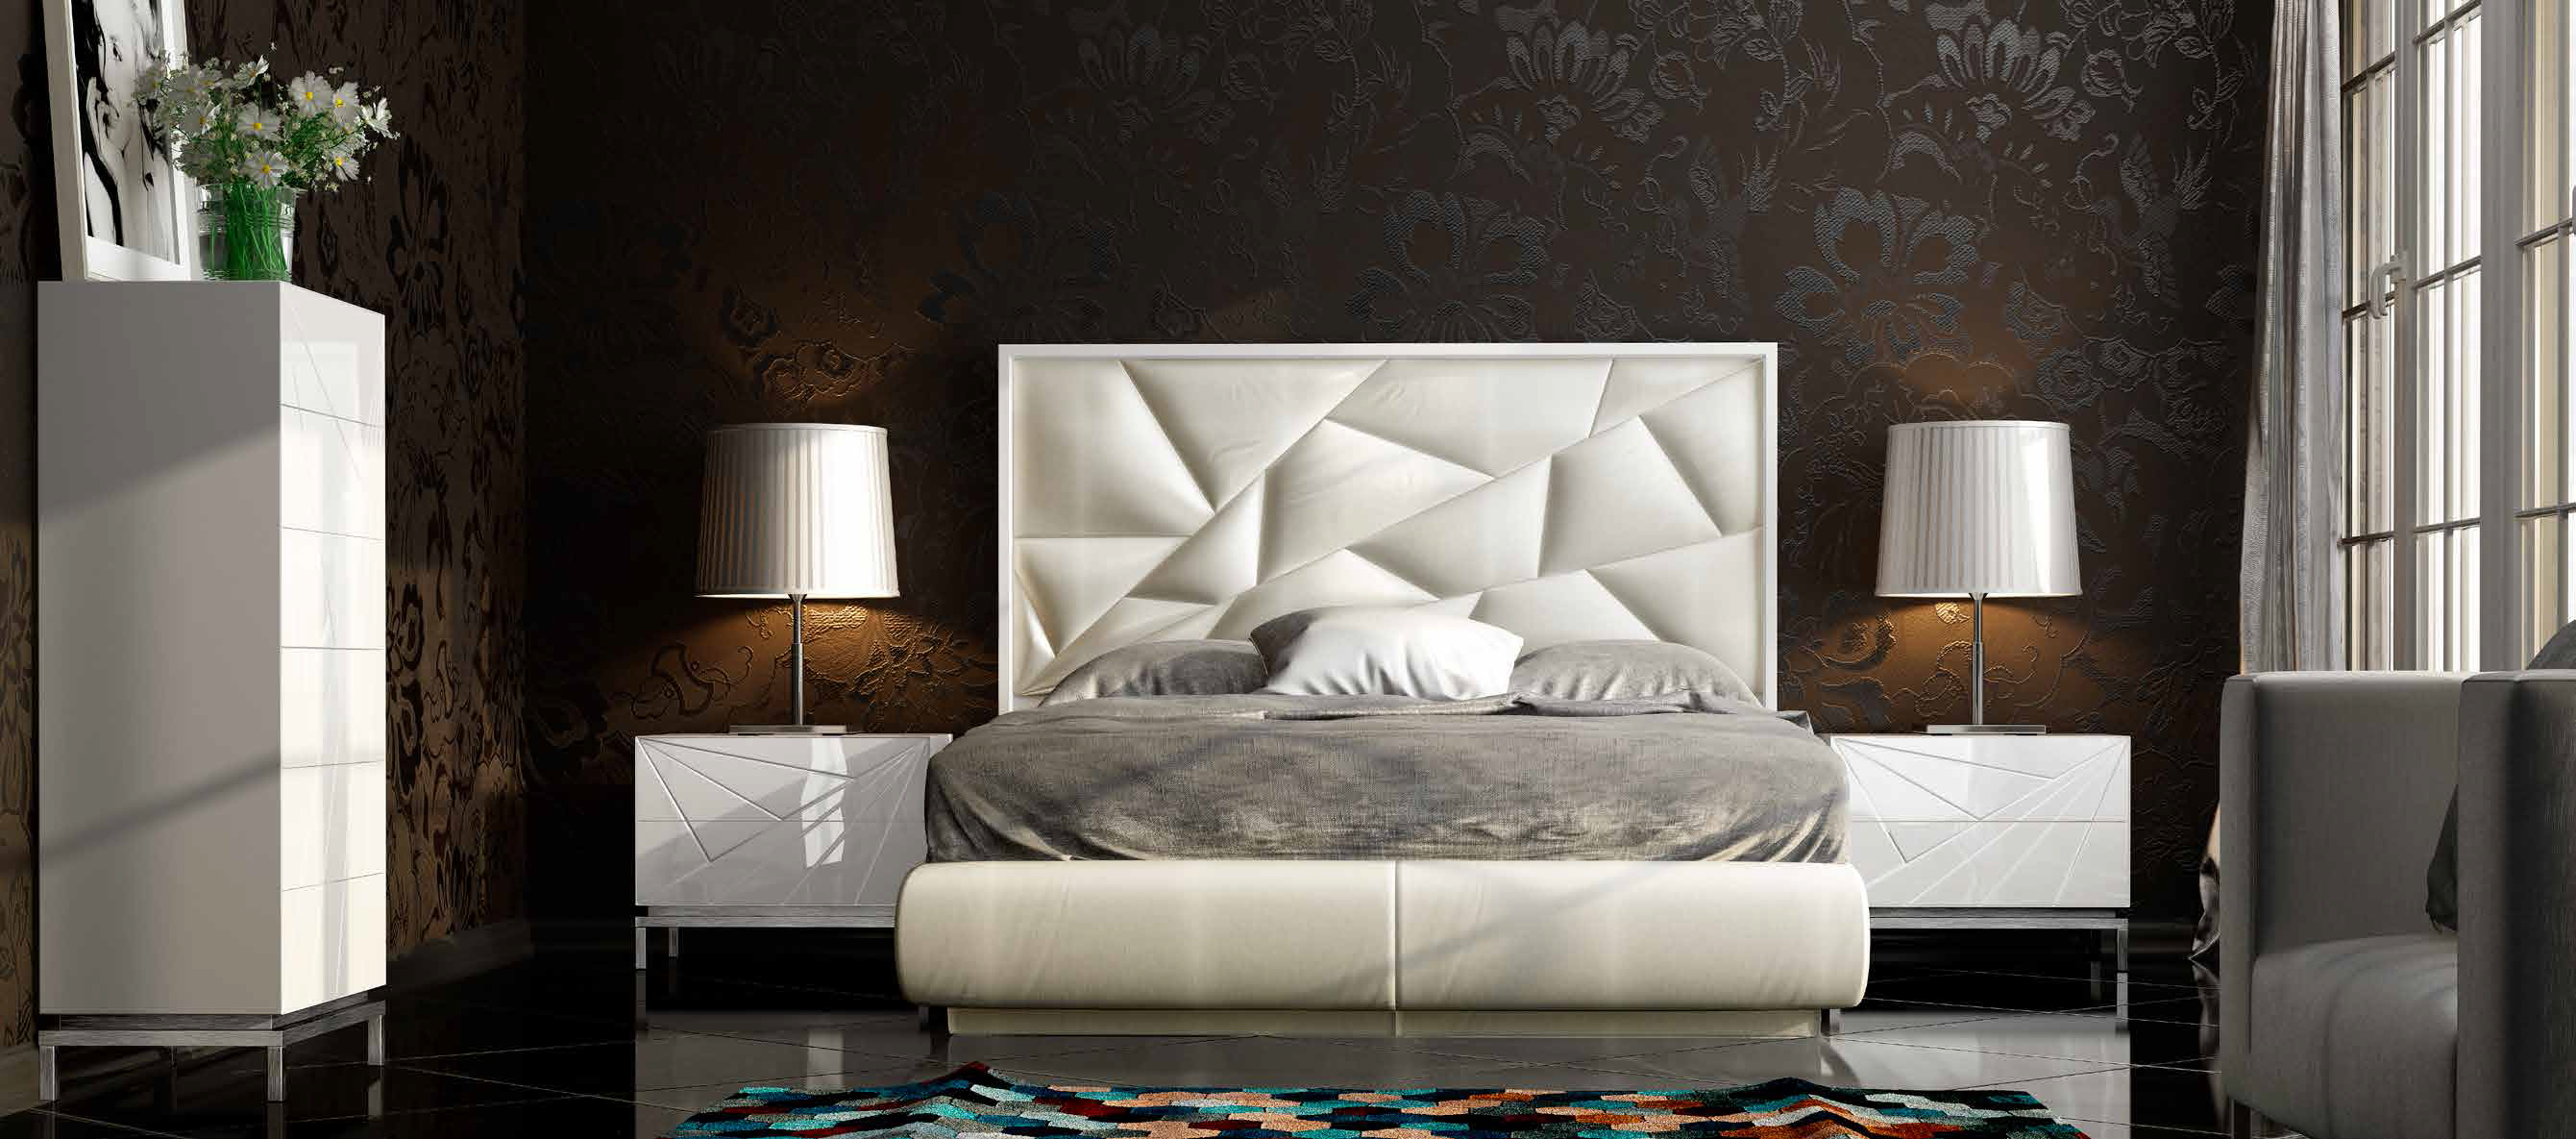 Brands Franco Furniture Bedrooms vol1, Spain DOR 20